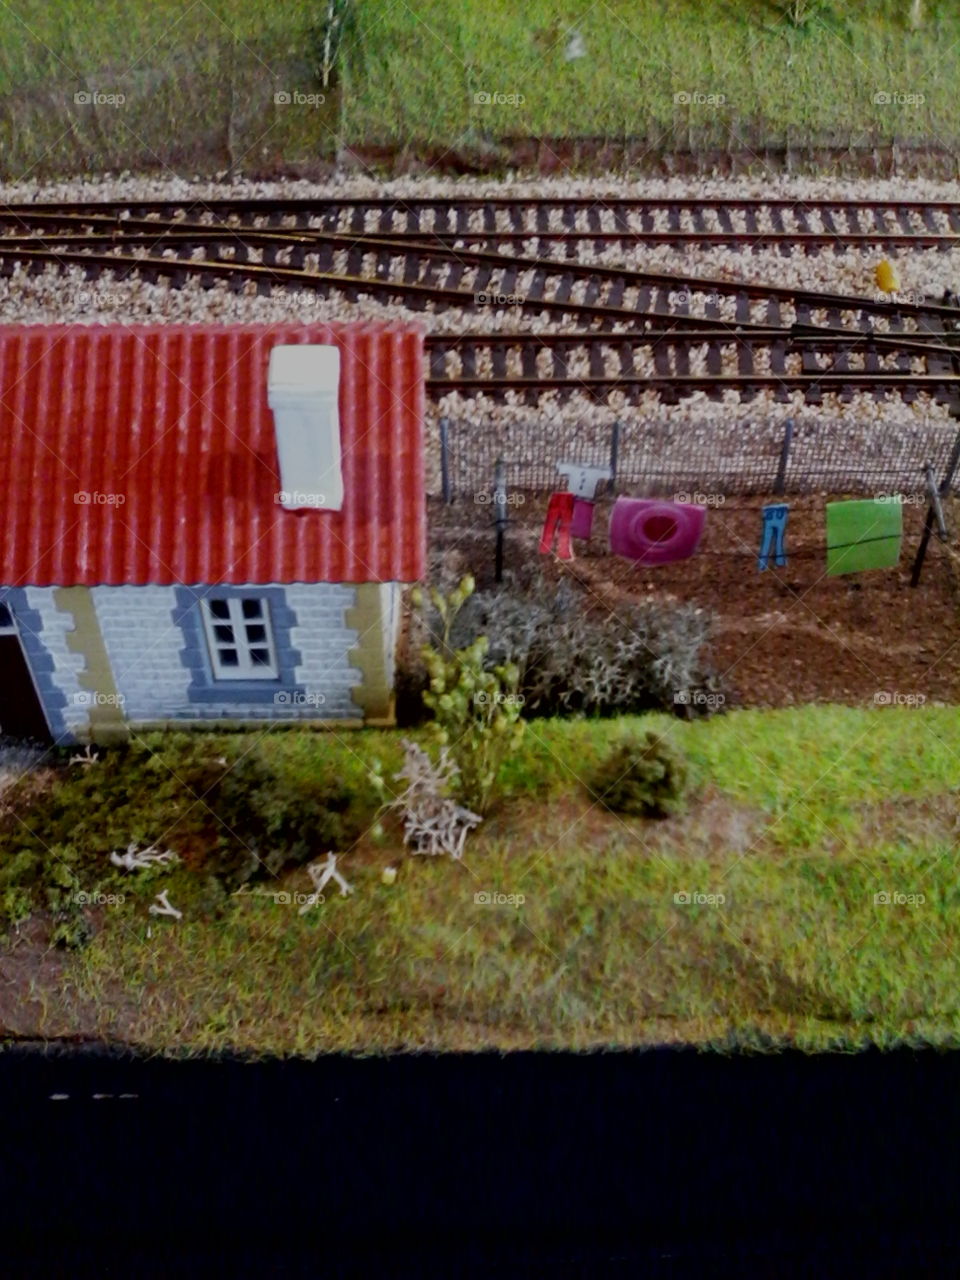 miniature train set